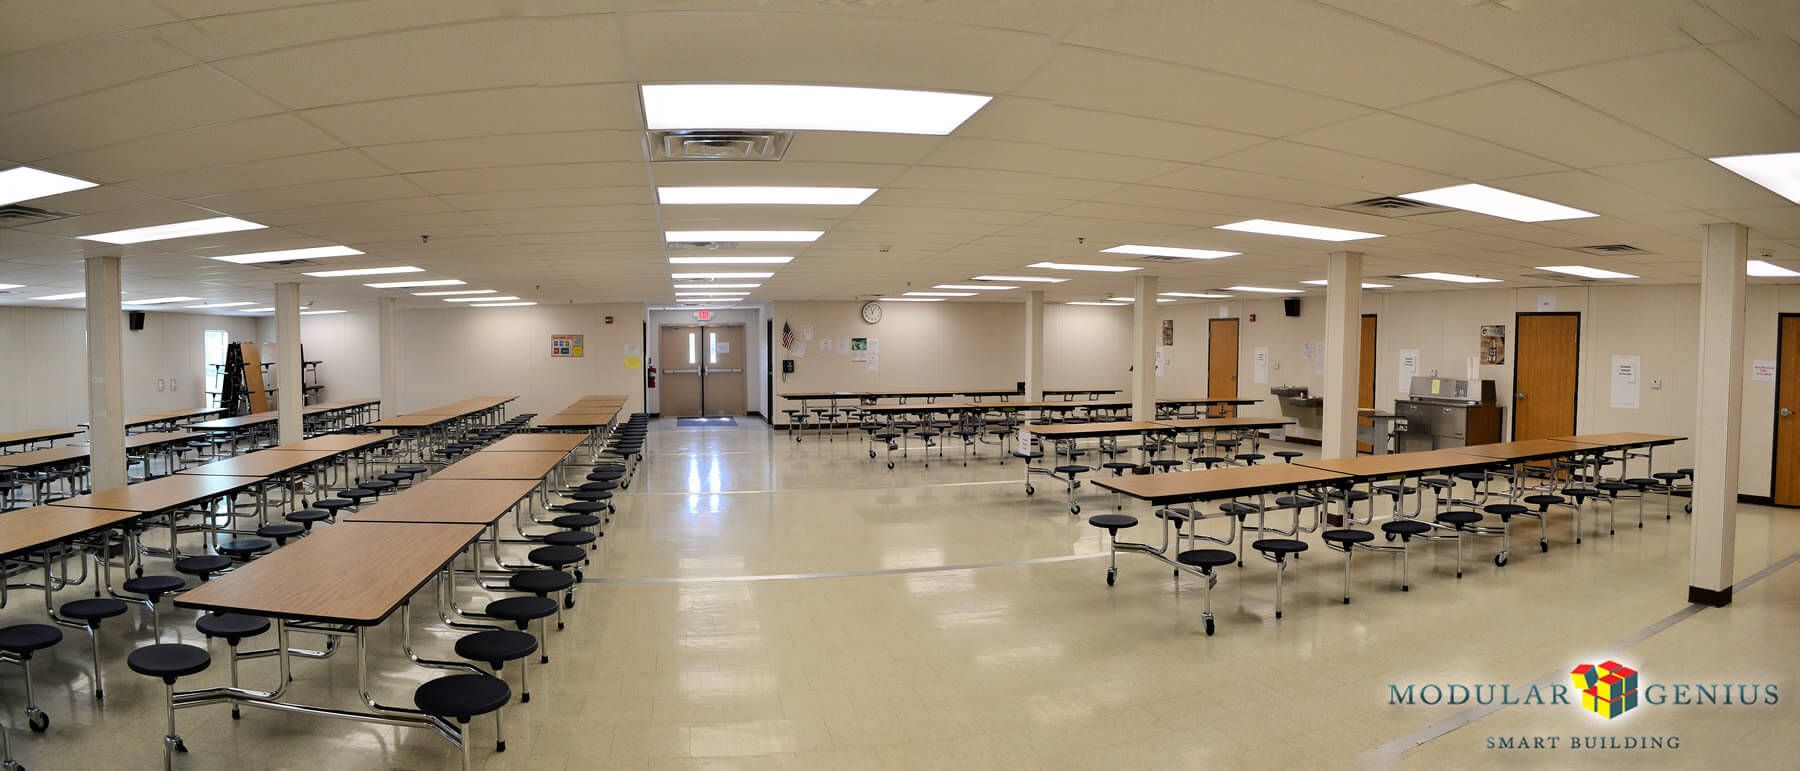 Summersville-Middle-School-Modular-Building-Cafeteria